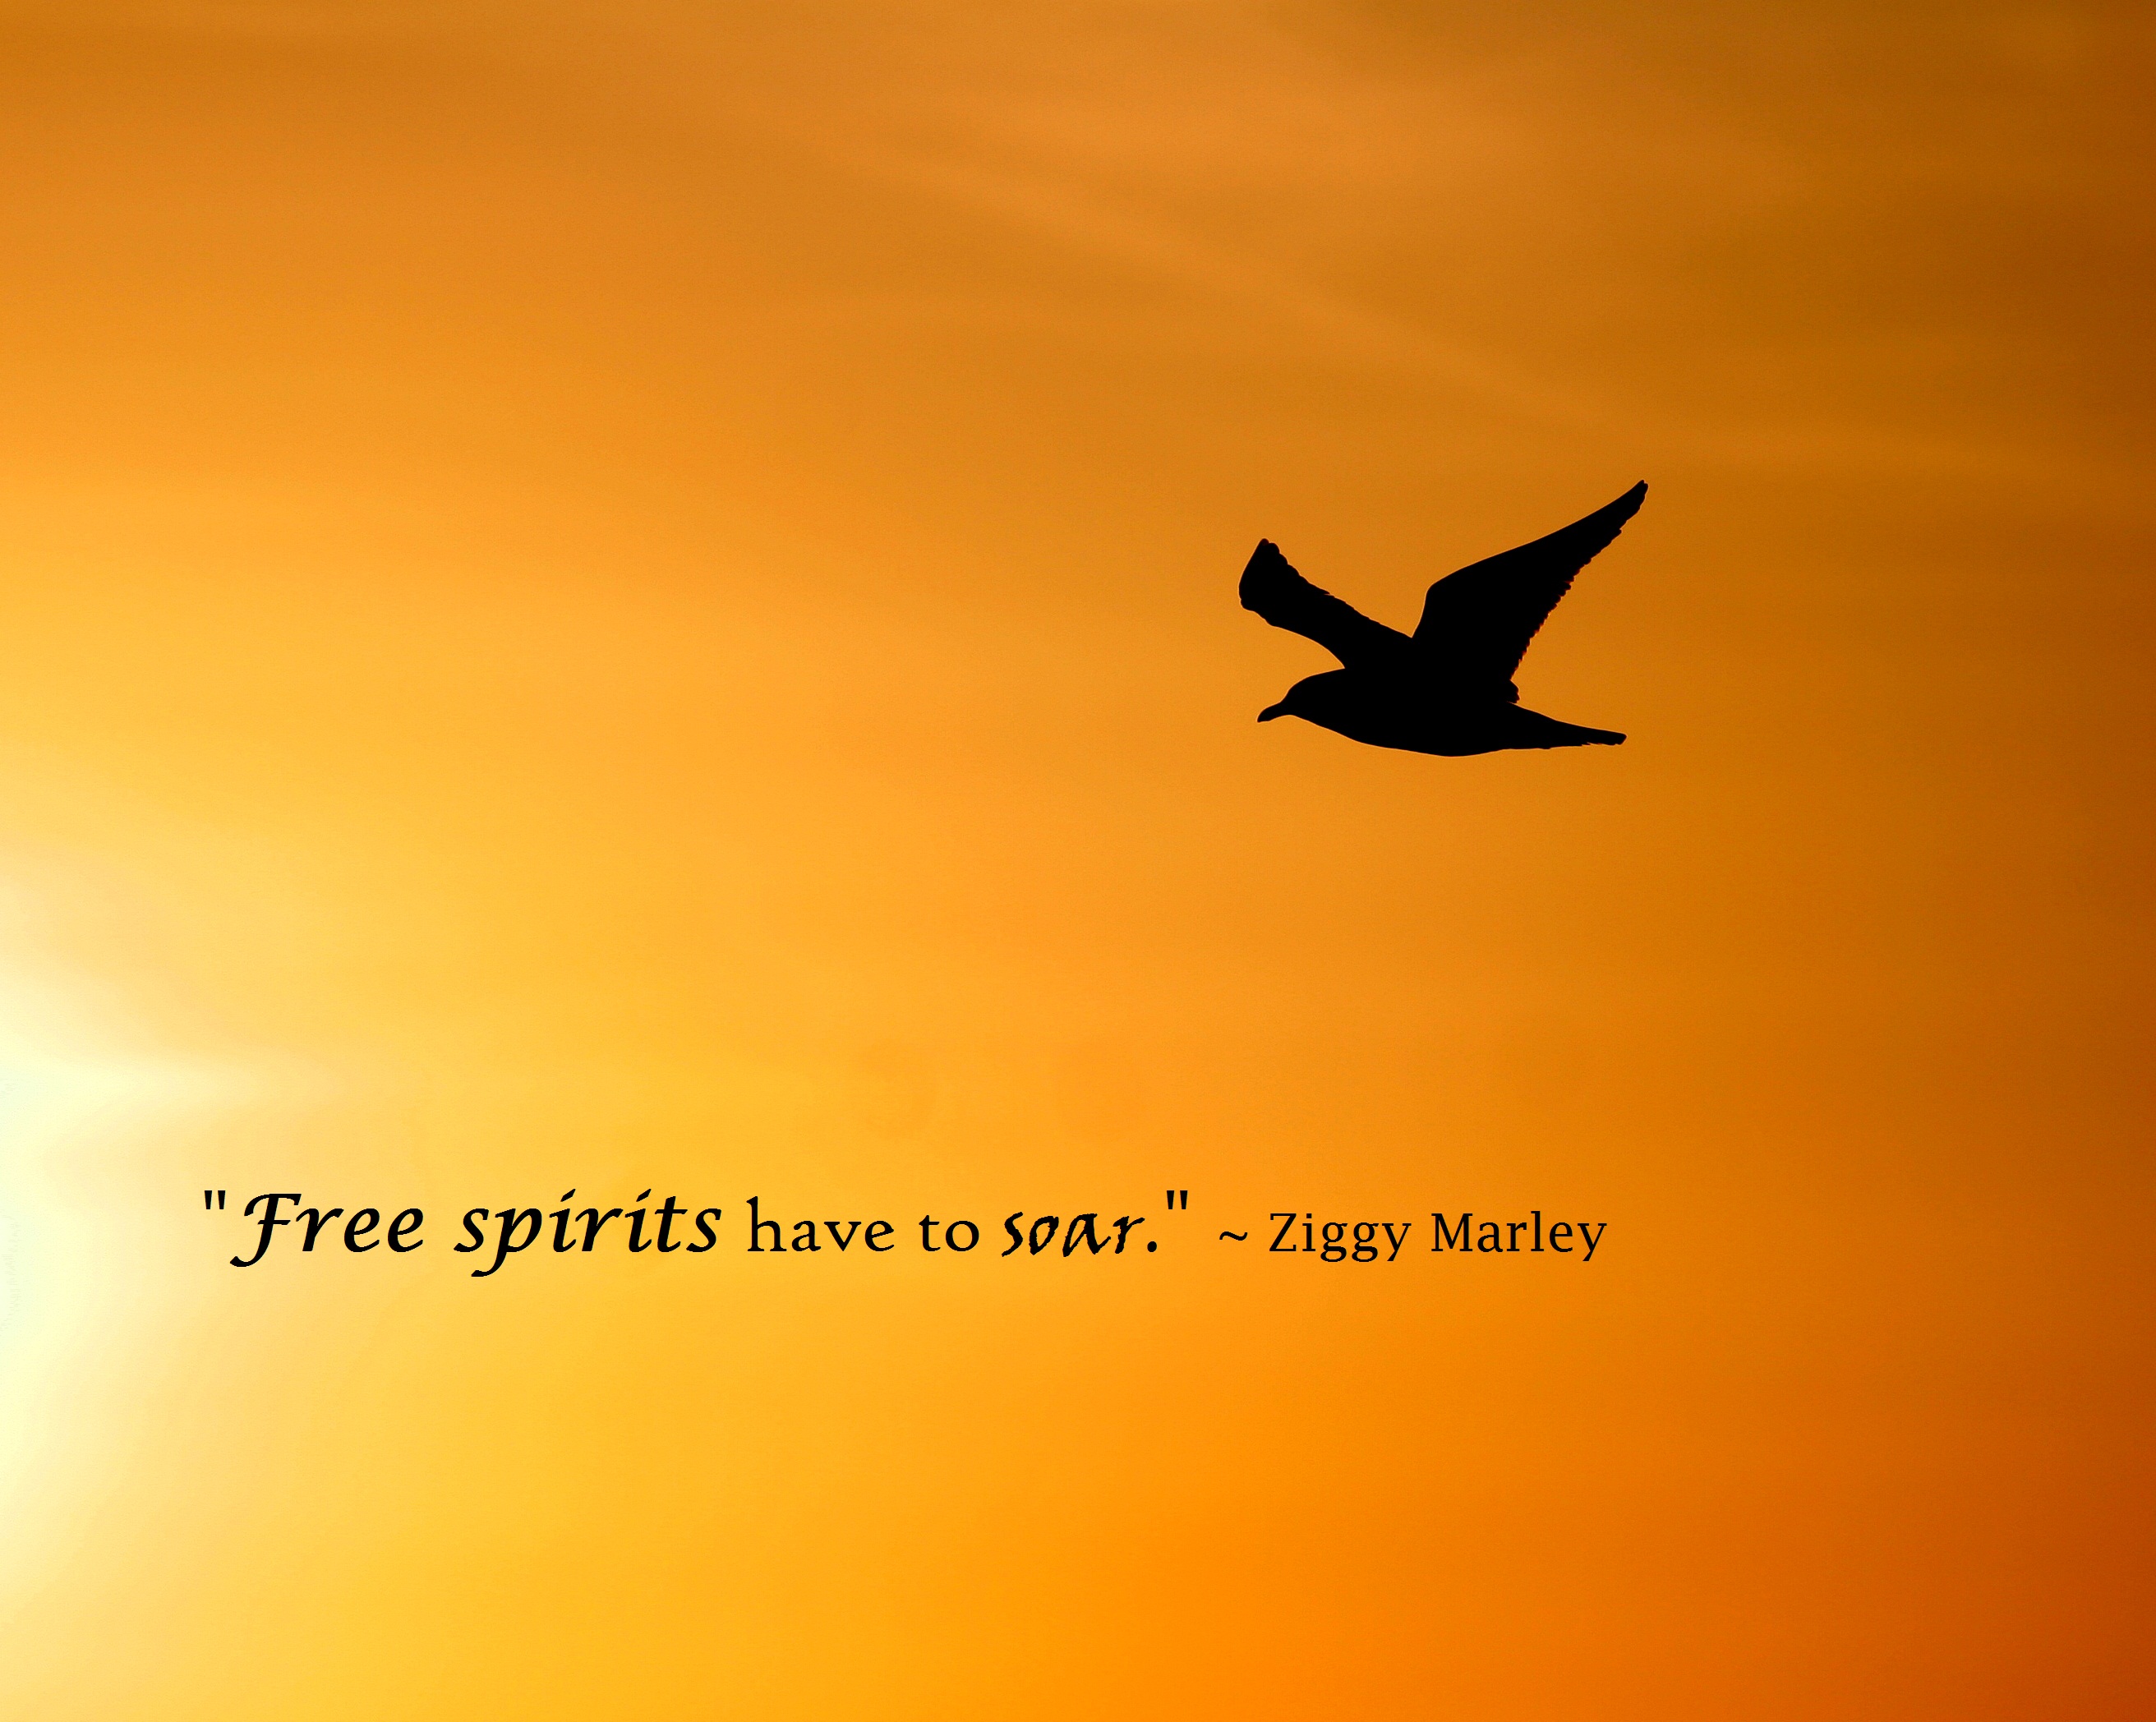 Ziggy Marley's quote #6